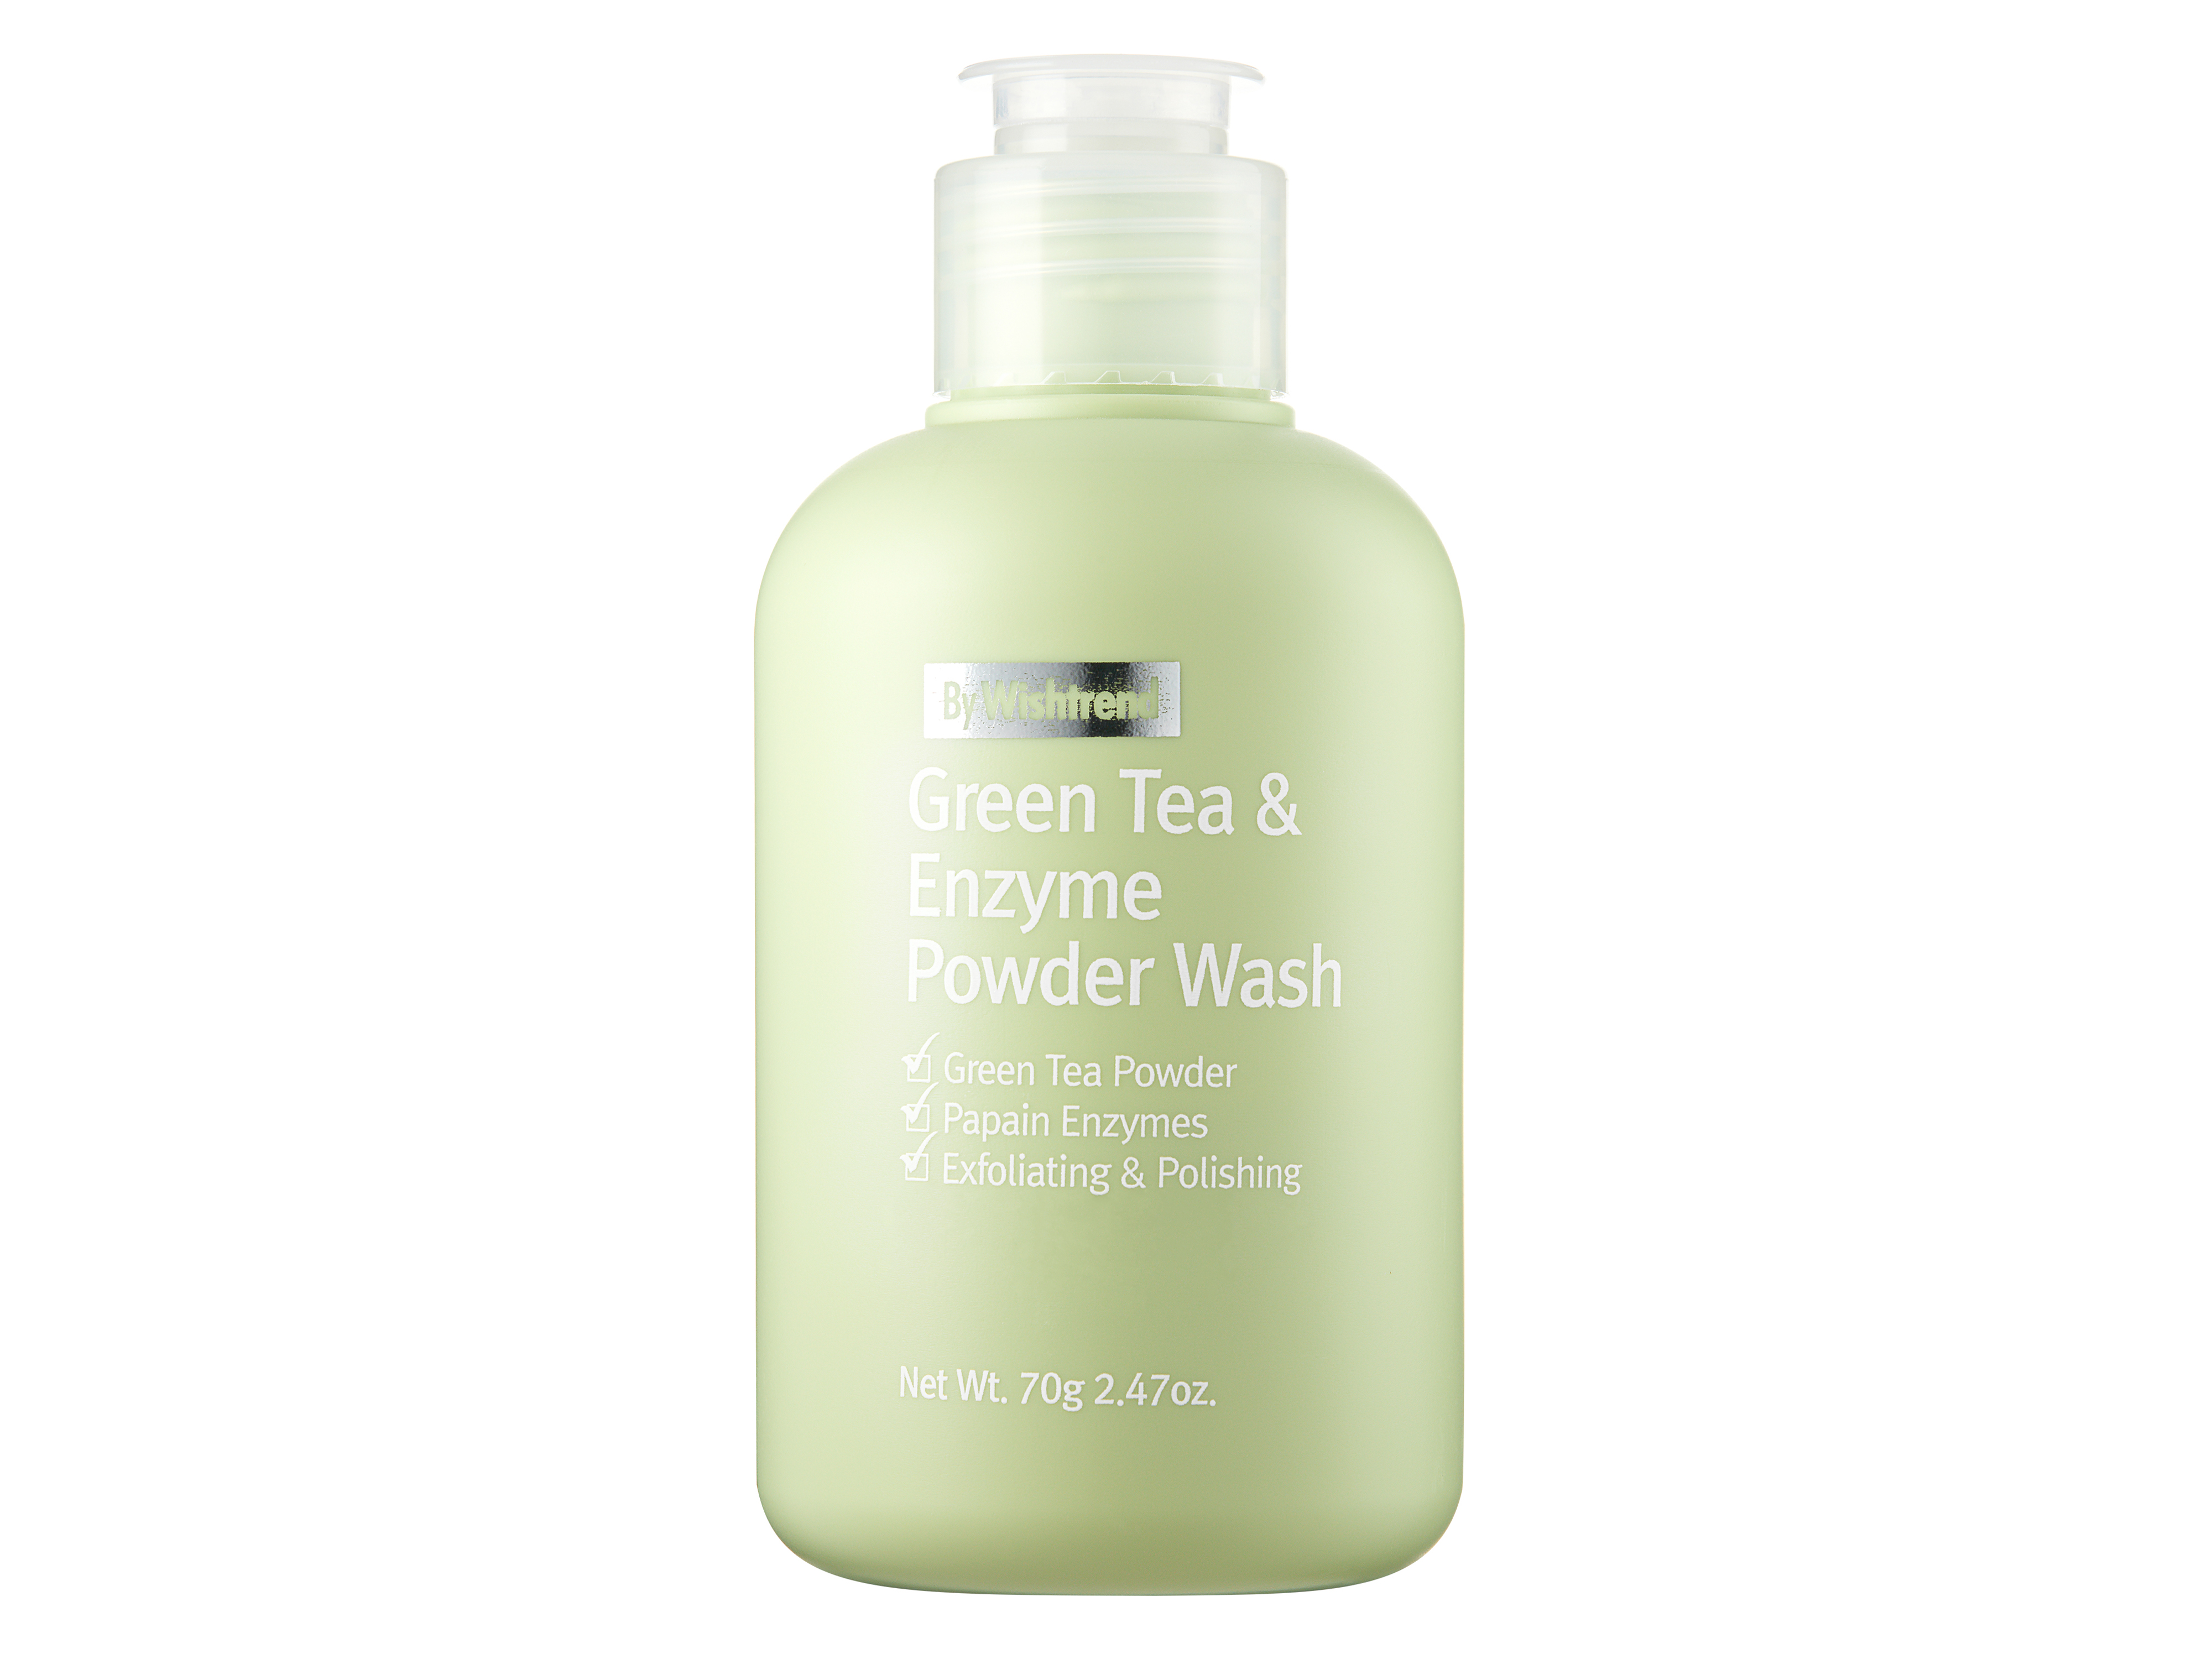 By Wishtrend Green Tea & Enzyme Powder Wash, 70 gram